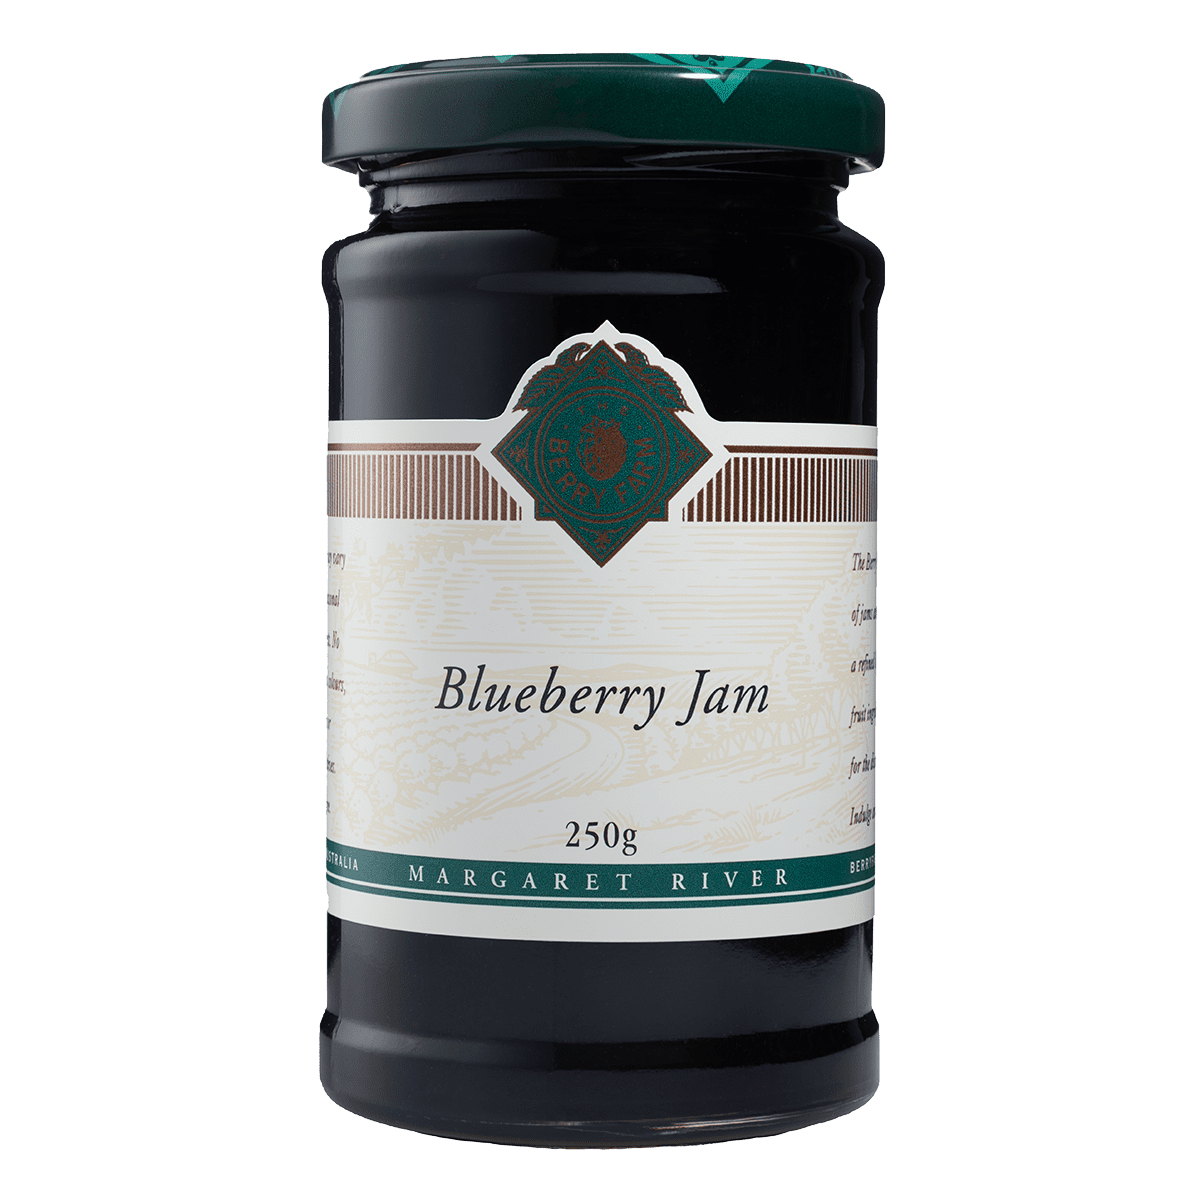 A jar of Blueberry Jam